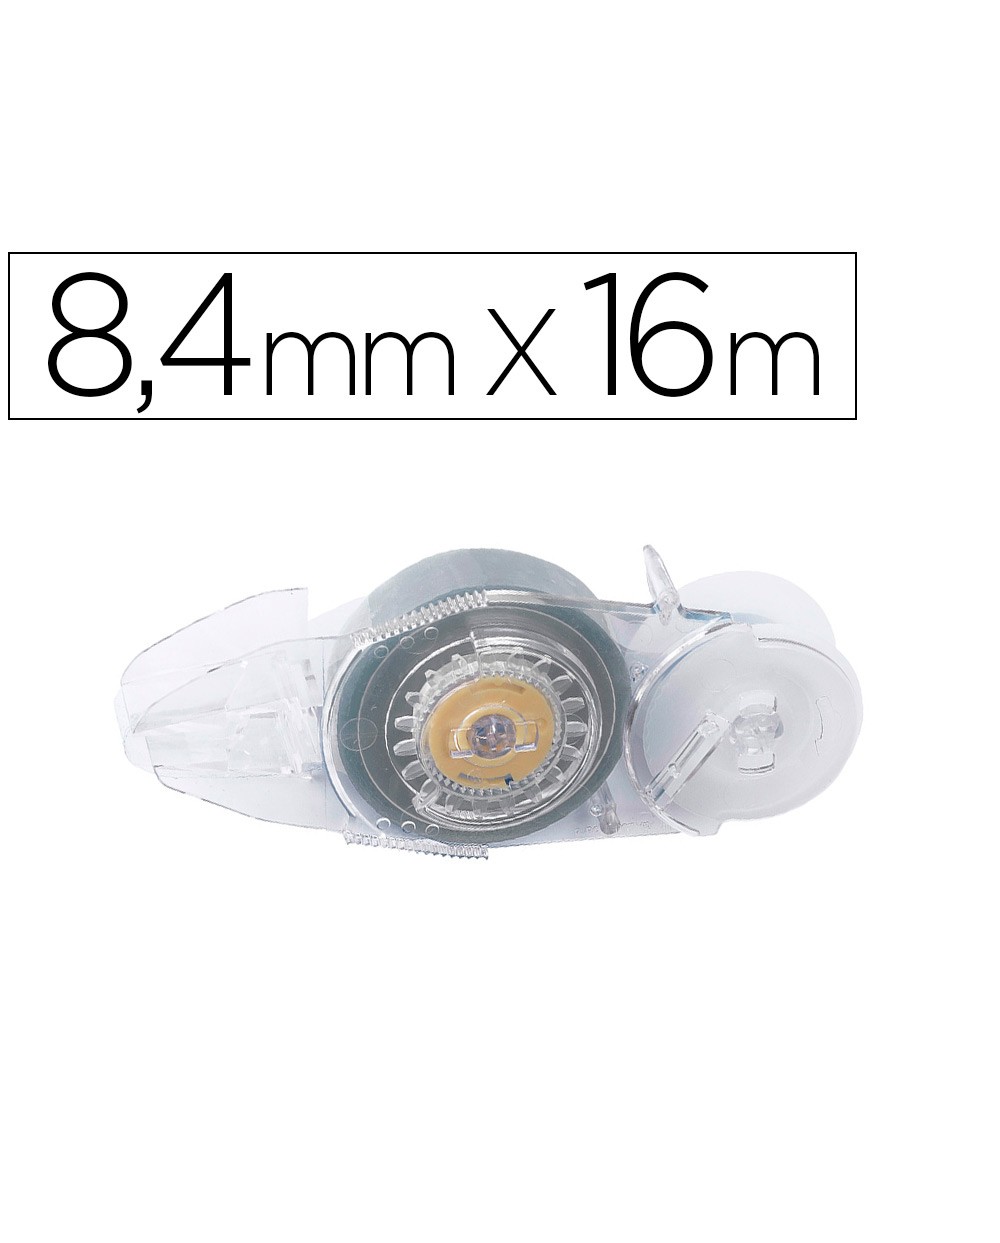 Recambio cinta adhesiva tombow maxi power tape permanente pn ip 84 mm x 16 m